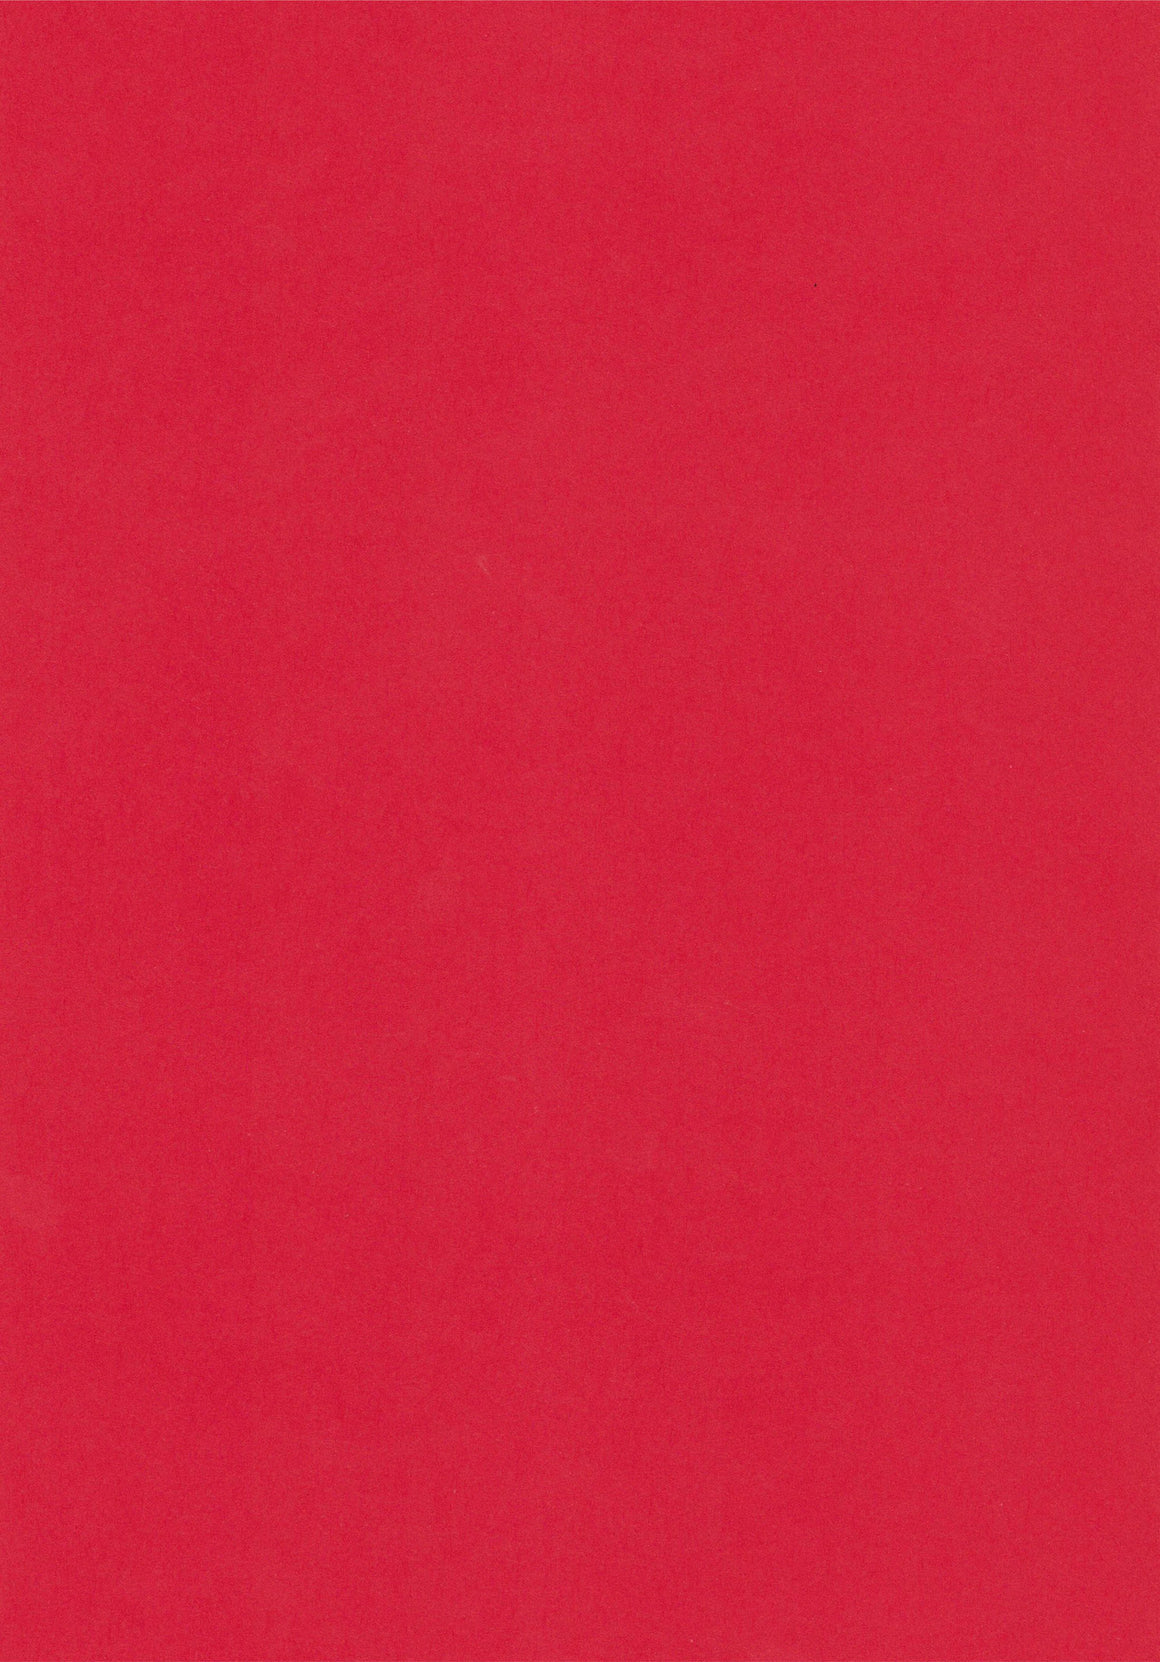 Kaskad rosella red 120gsm paper